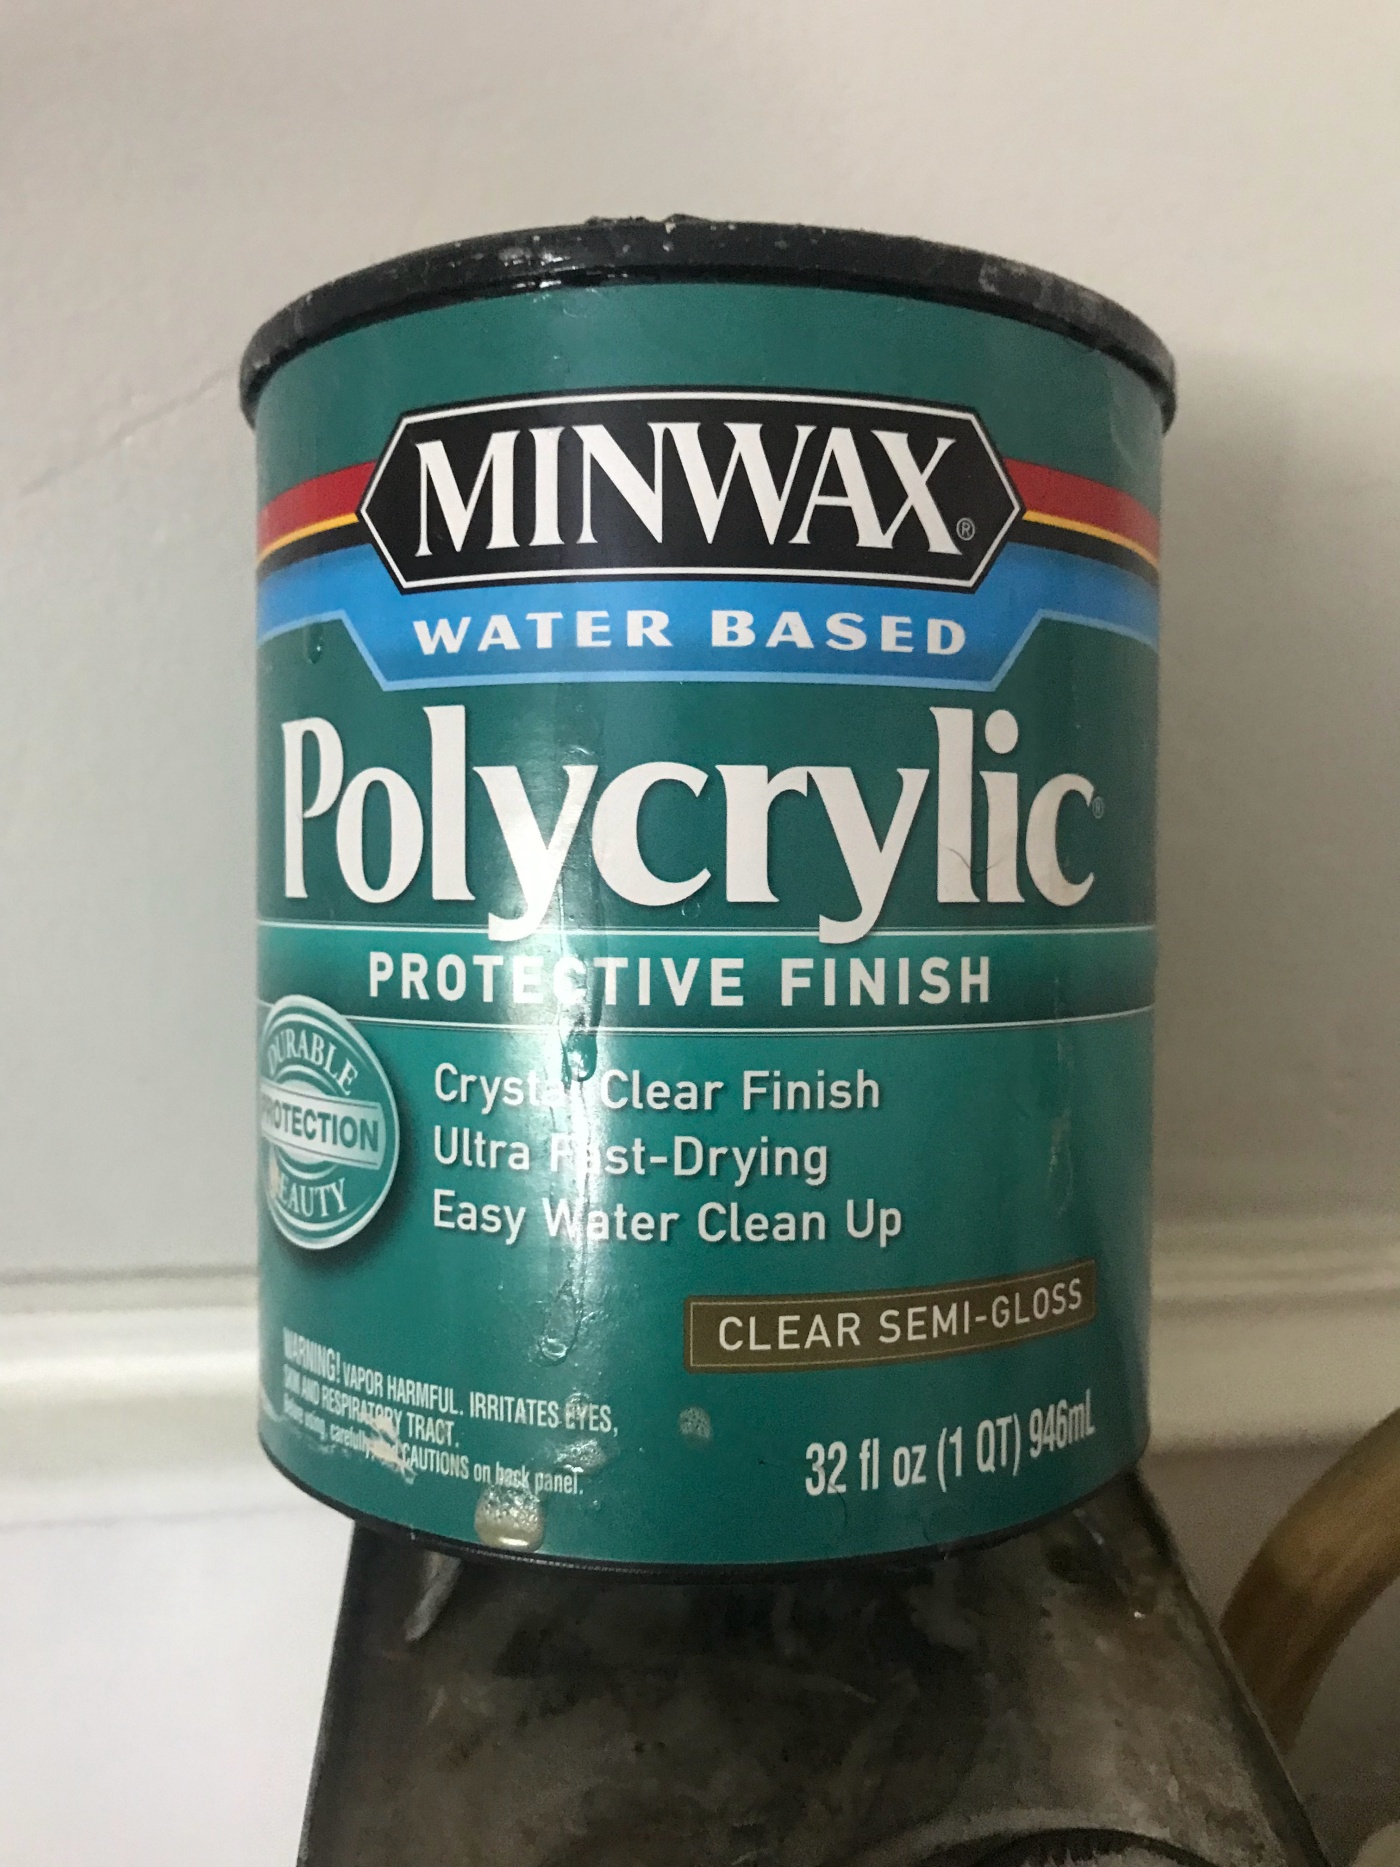 Minwax Clear Semi-Gloss Polycrylic Protective Finish